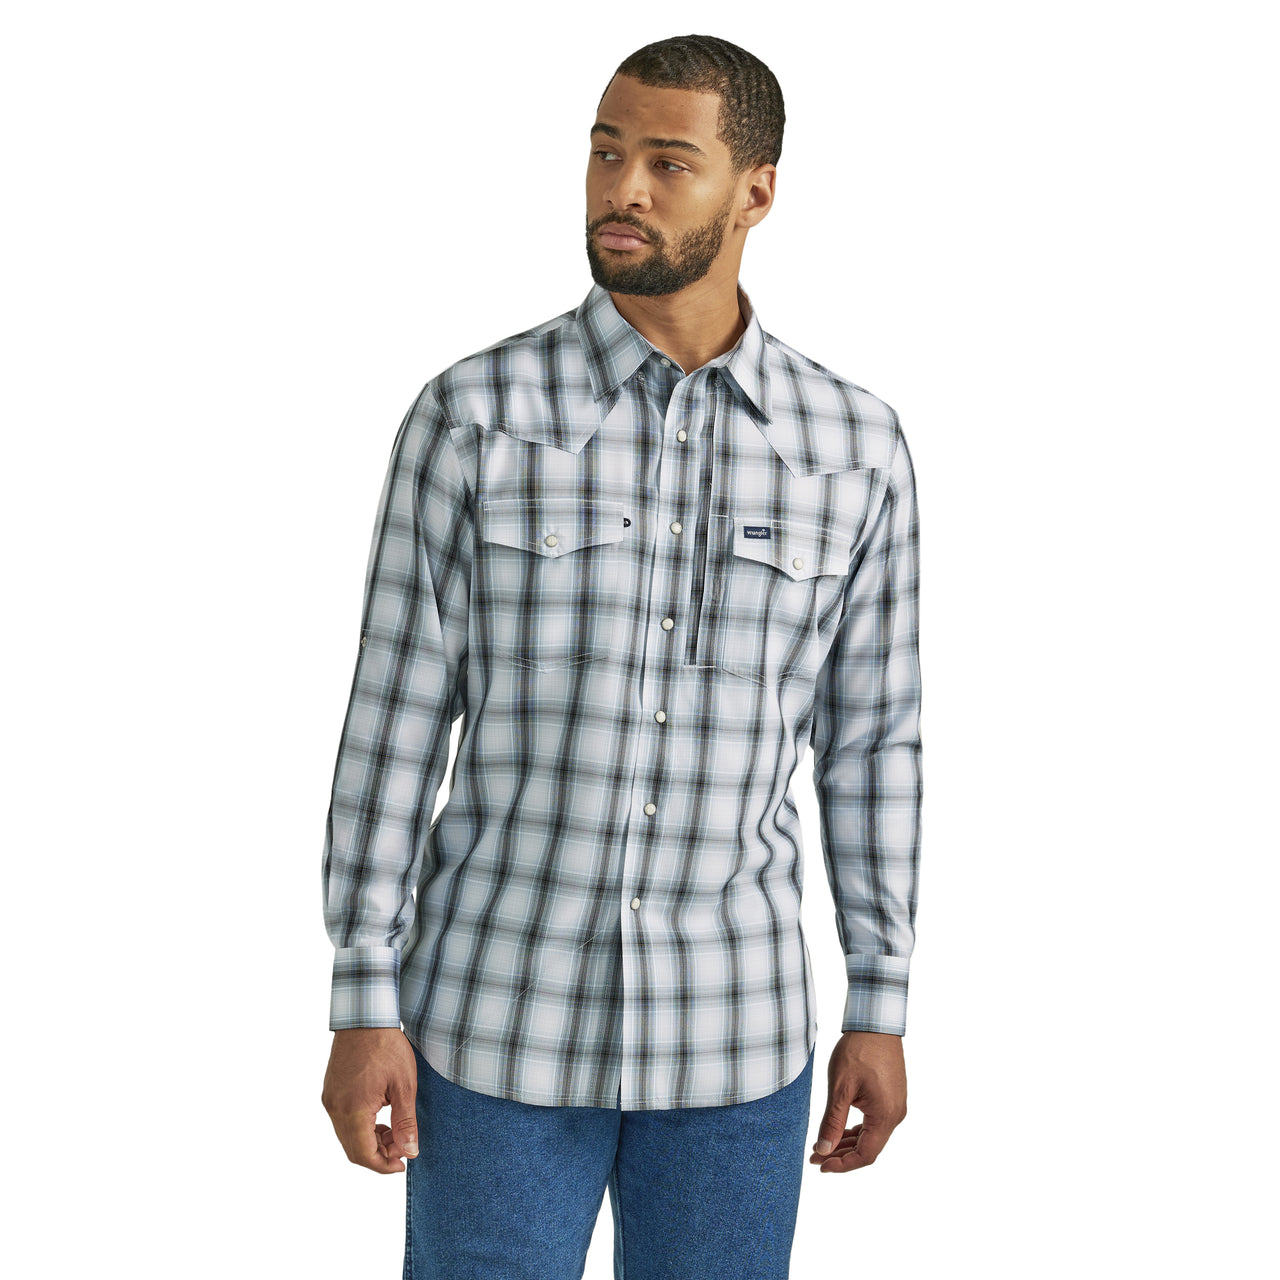 Wrangler Men's Western Plaid Long Sleeve Shirt - Blue